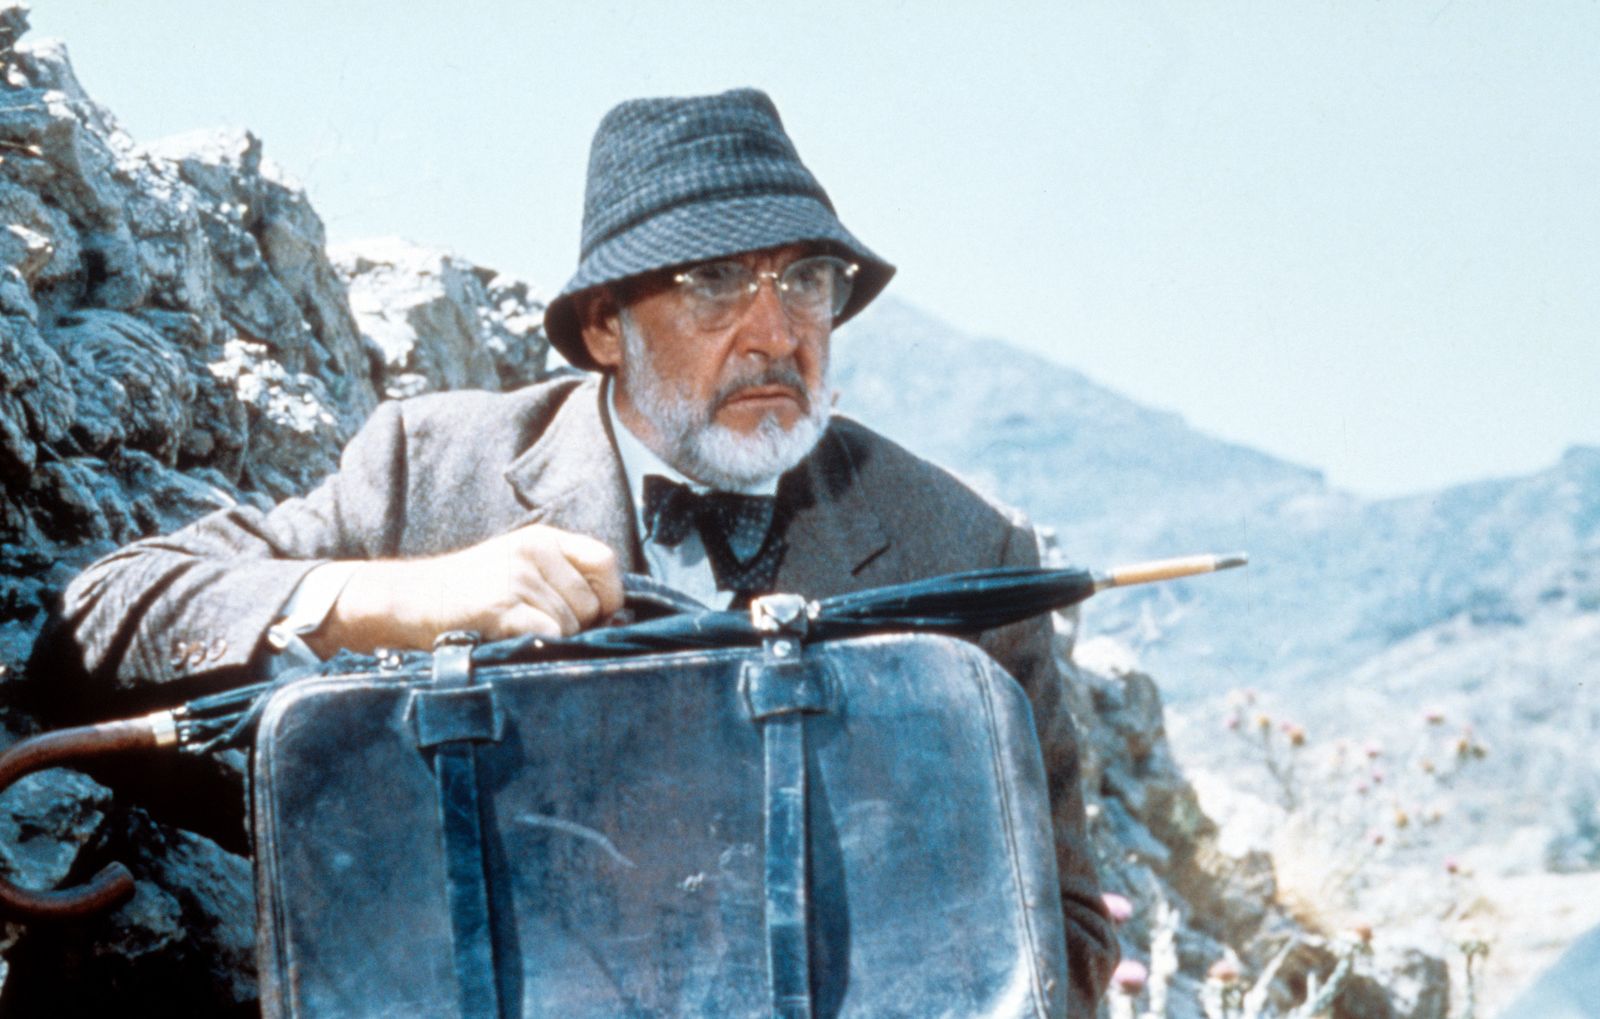 Sean Connery dans une scène du film "Indiana Jones And The Last Crusade", 1989. | Photo : Getty Images